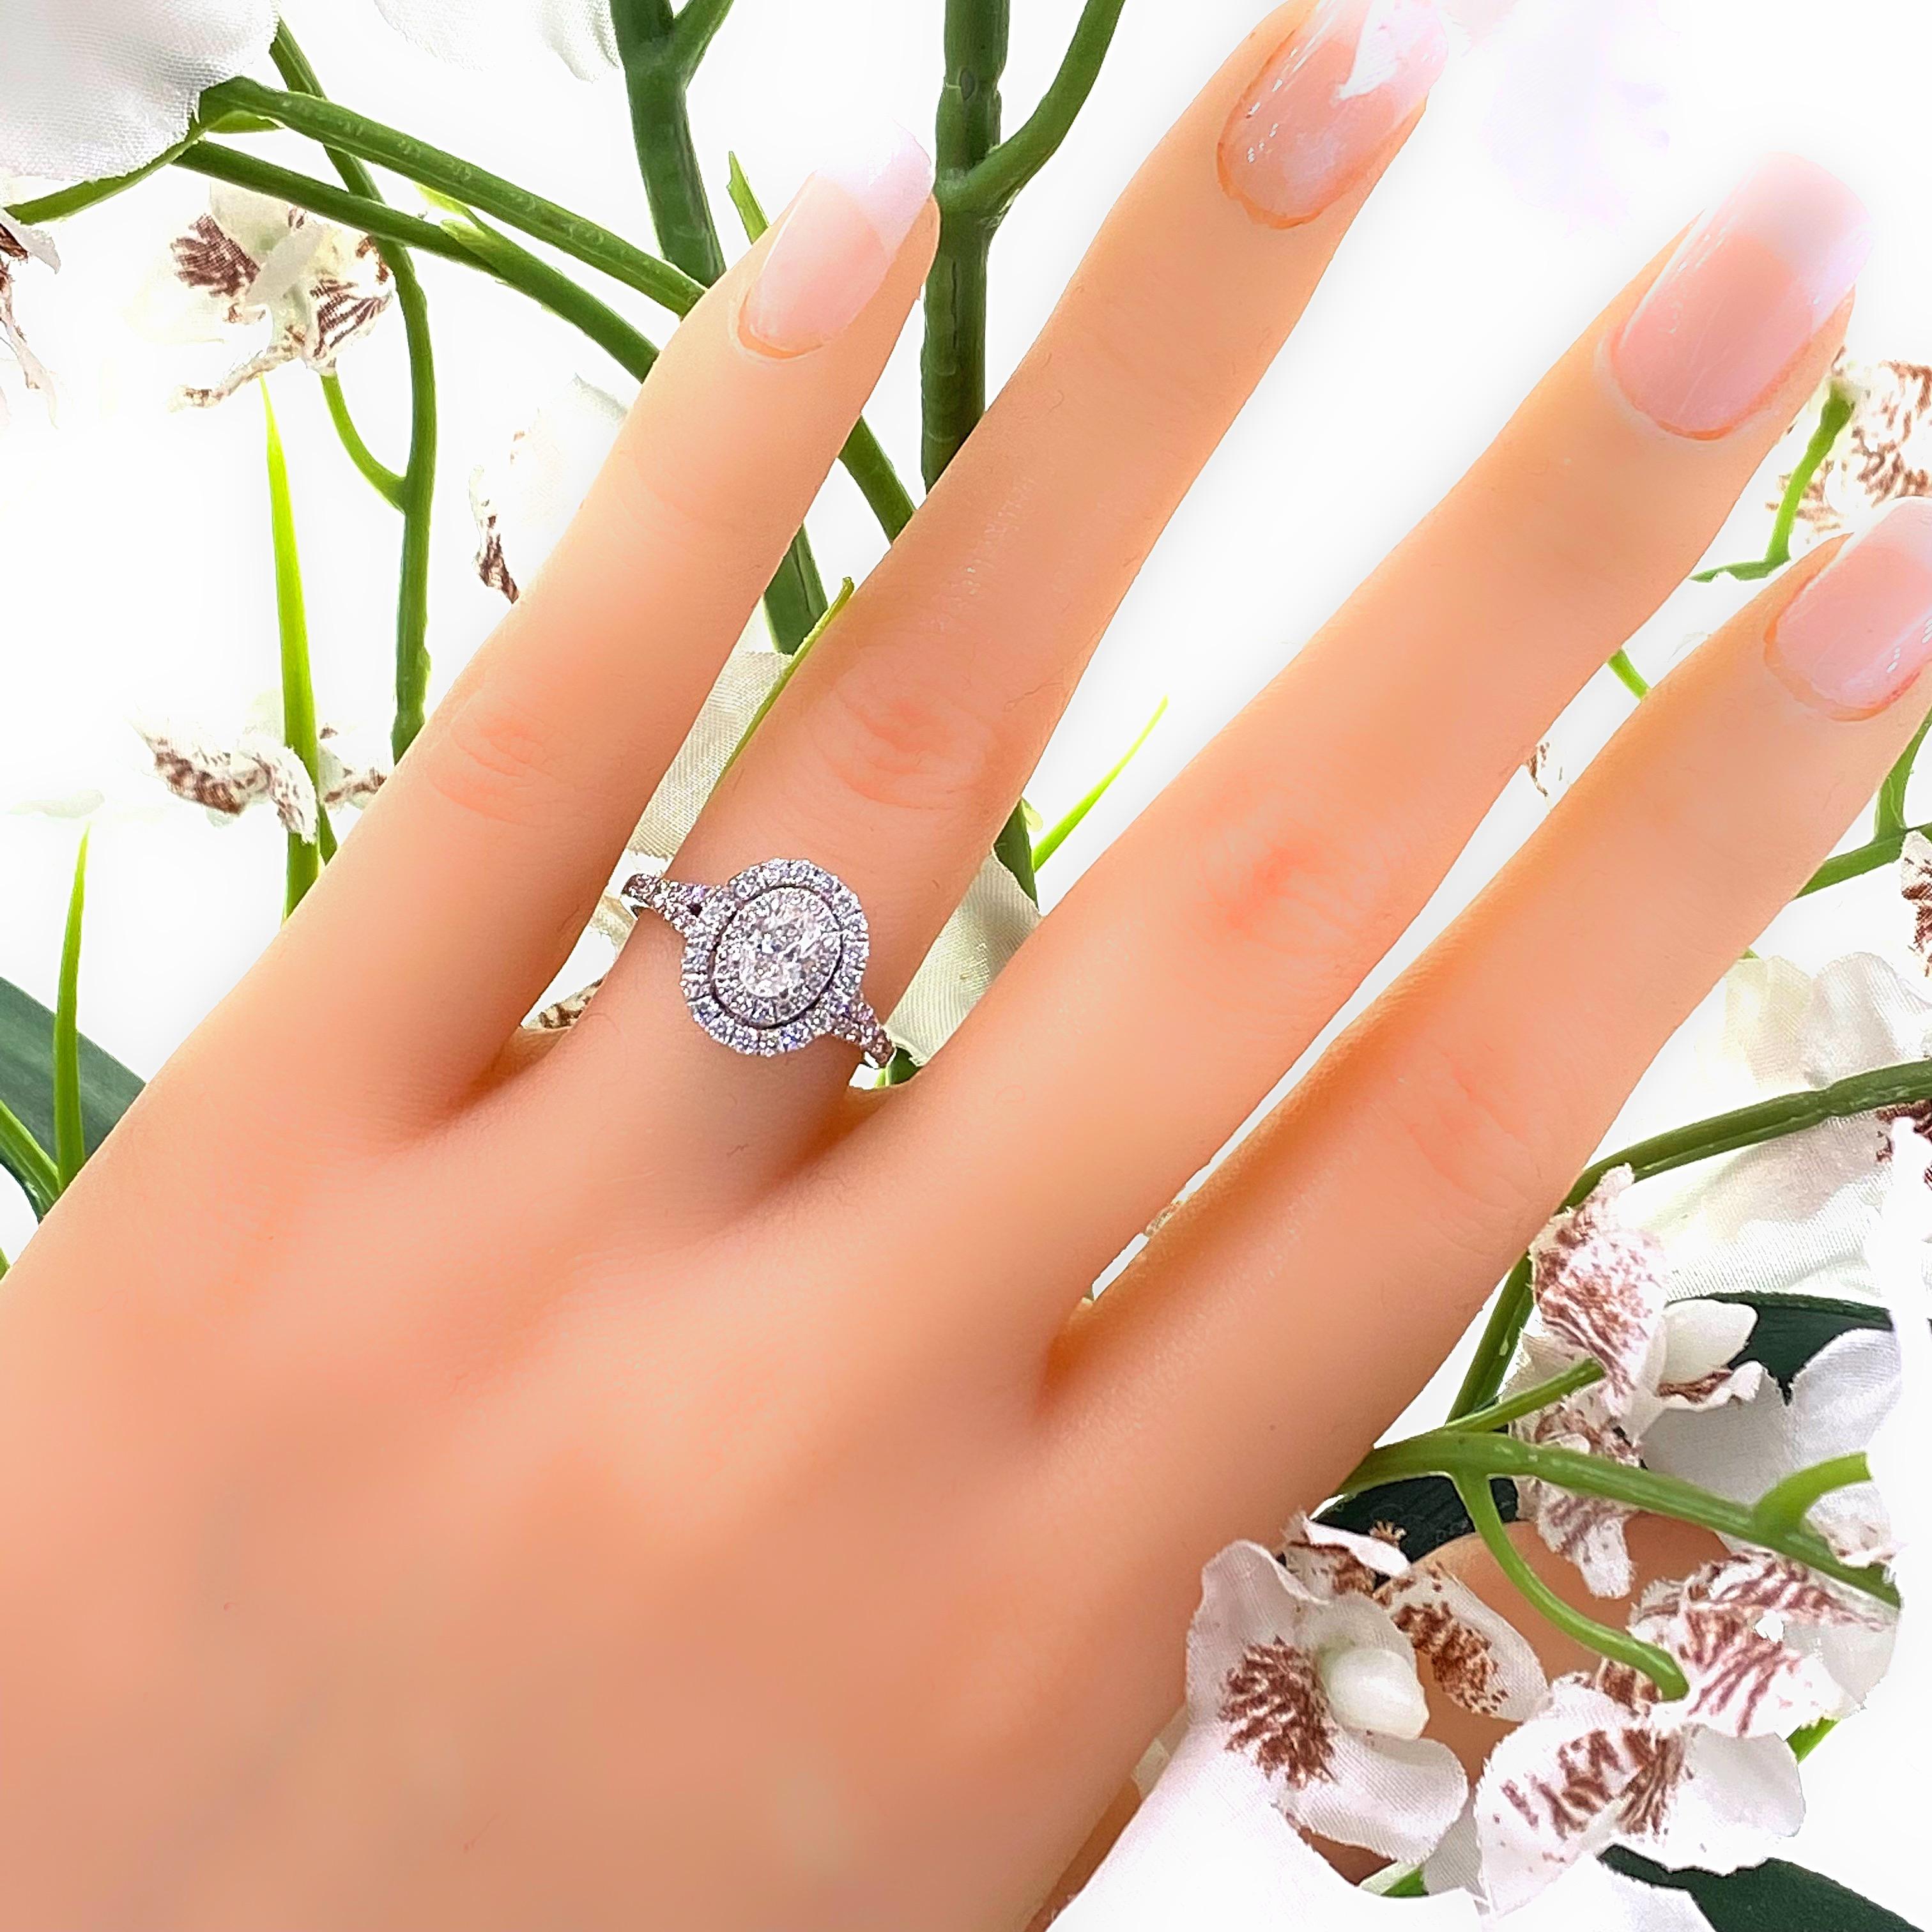 Neil Lane Bridal Double Halo Oval Diamond Engagement Ring
Style:  Halo
Metal:  14kt White Gold
Size:  6 - sizable
TCW:  1.00 tcw
Main Diamond:  Oval Diamond 0.50 cts
Color & Clarity:  I, I1
Accent Diamonds:   62 Round Brilliant Diamonds 0.50